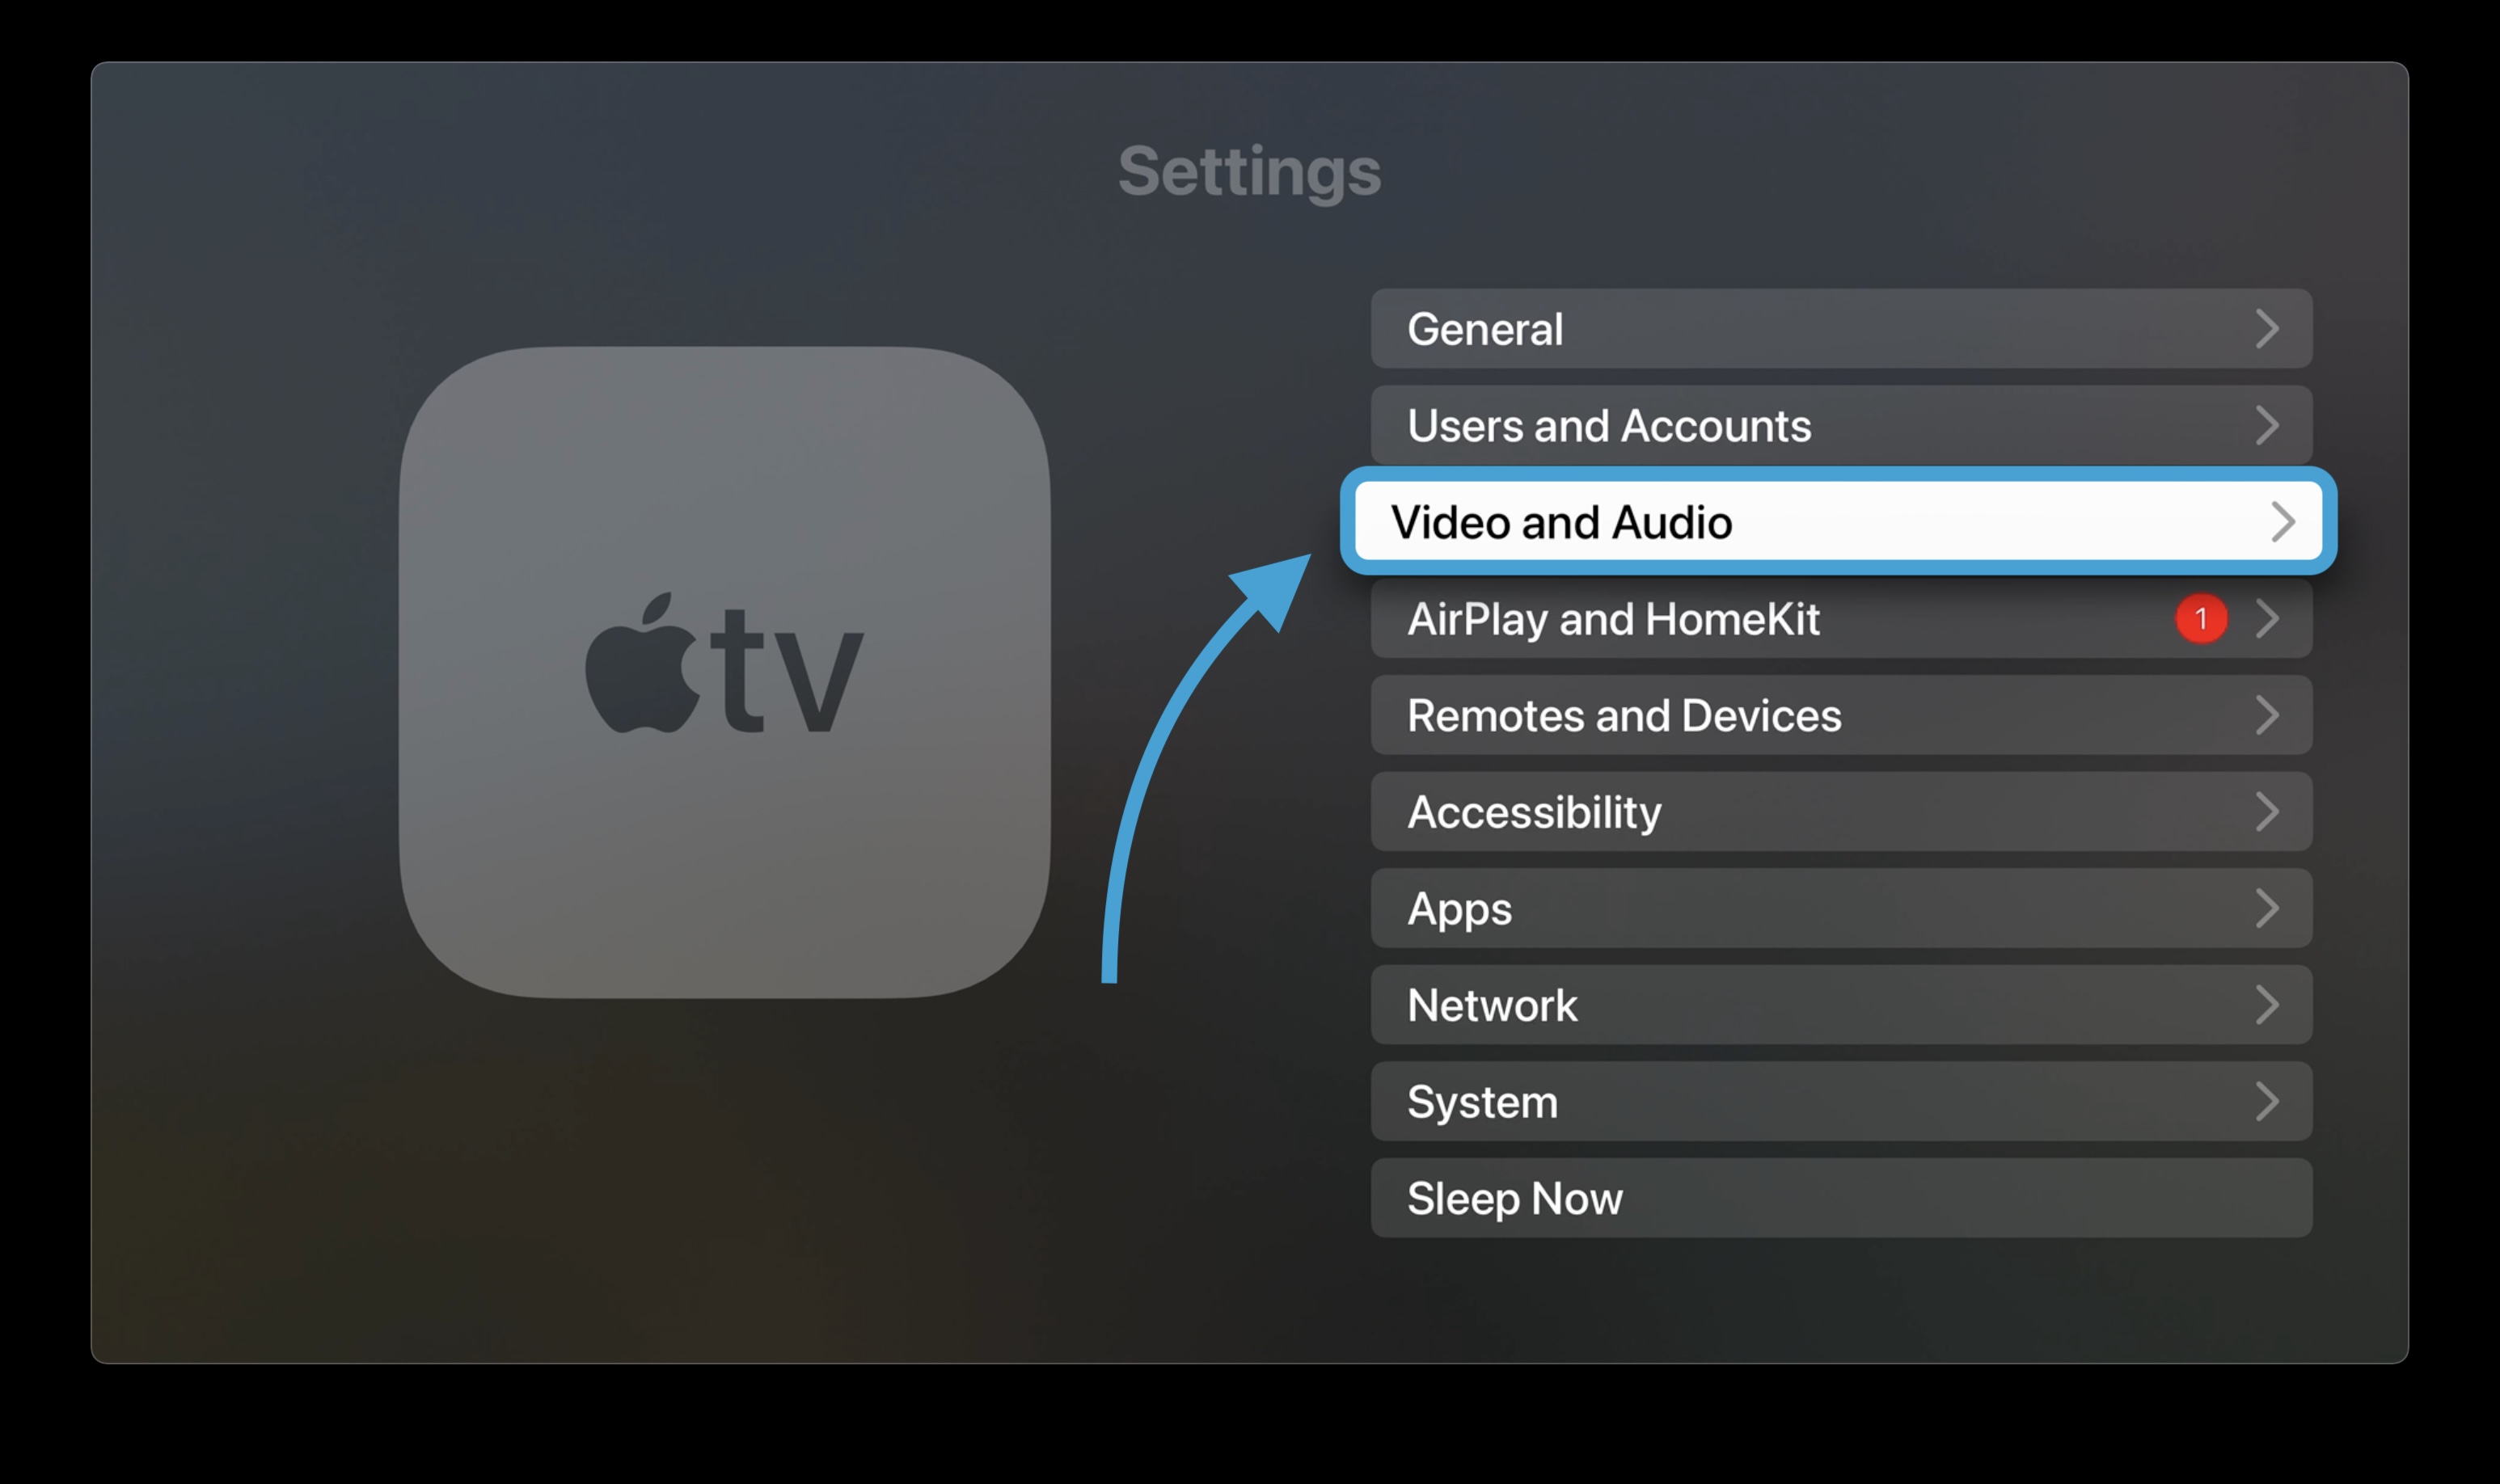 How to set HomePod as Apple TV default speakers walkthrough 1 - Choose Video and Audio in Settings